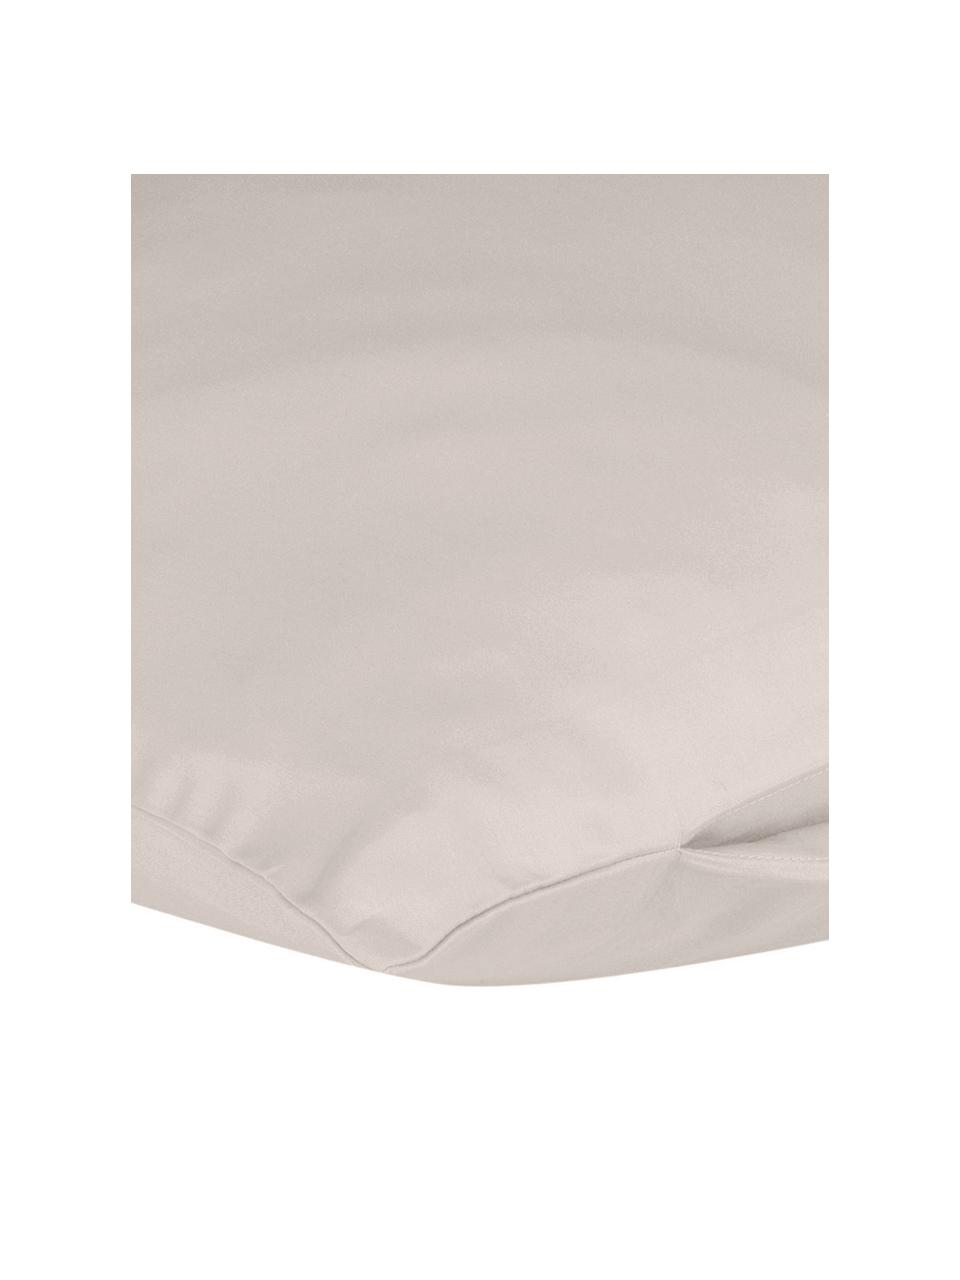 Funda de almohada de satén Comfort, 45 x 110 cm, Gris pardo, An 45 x L 110 cm